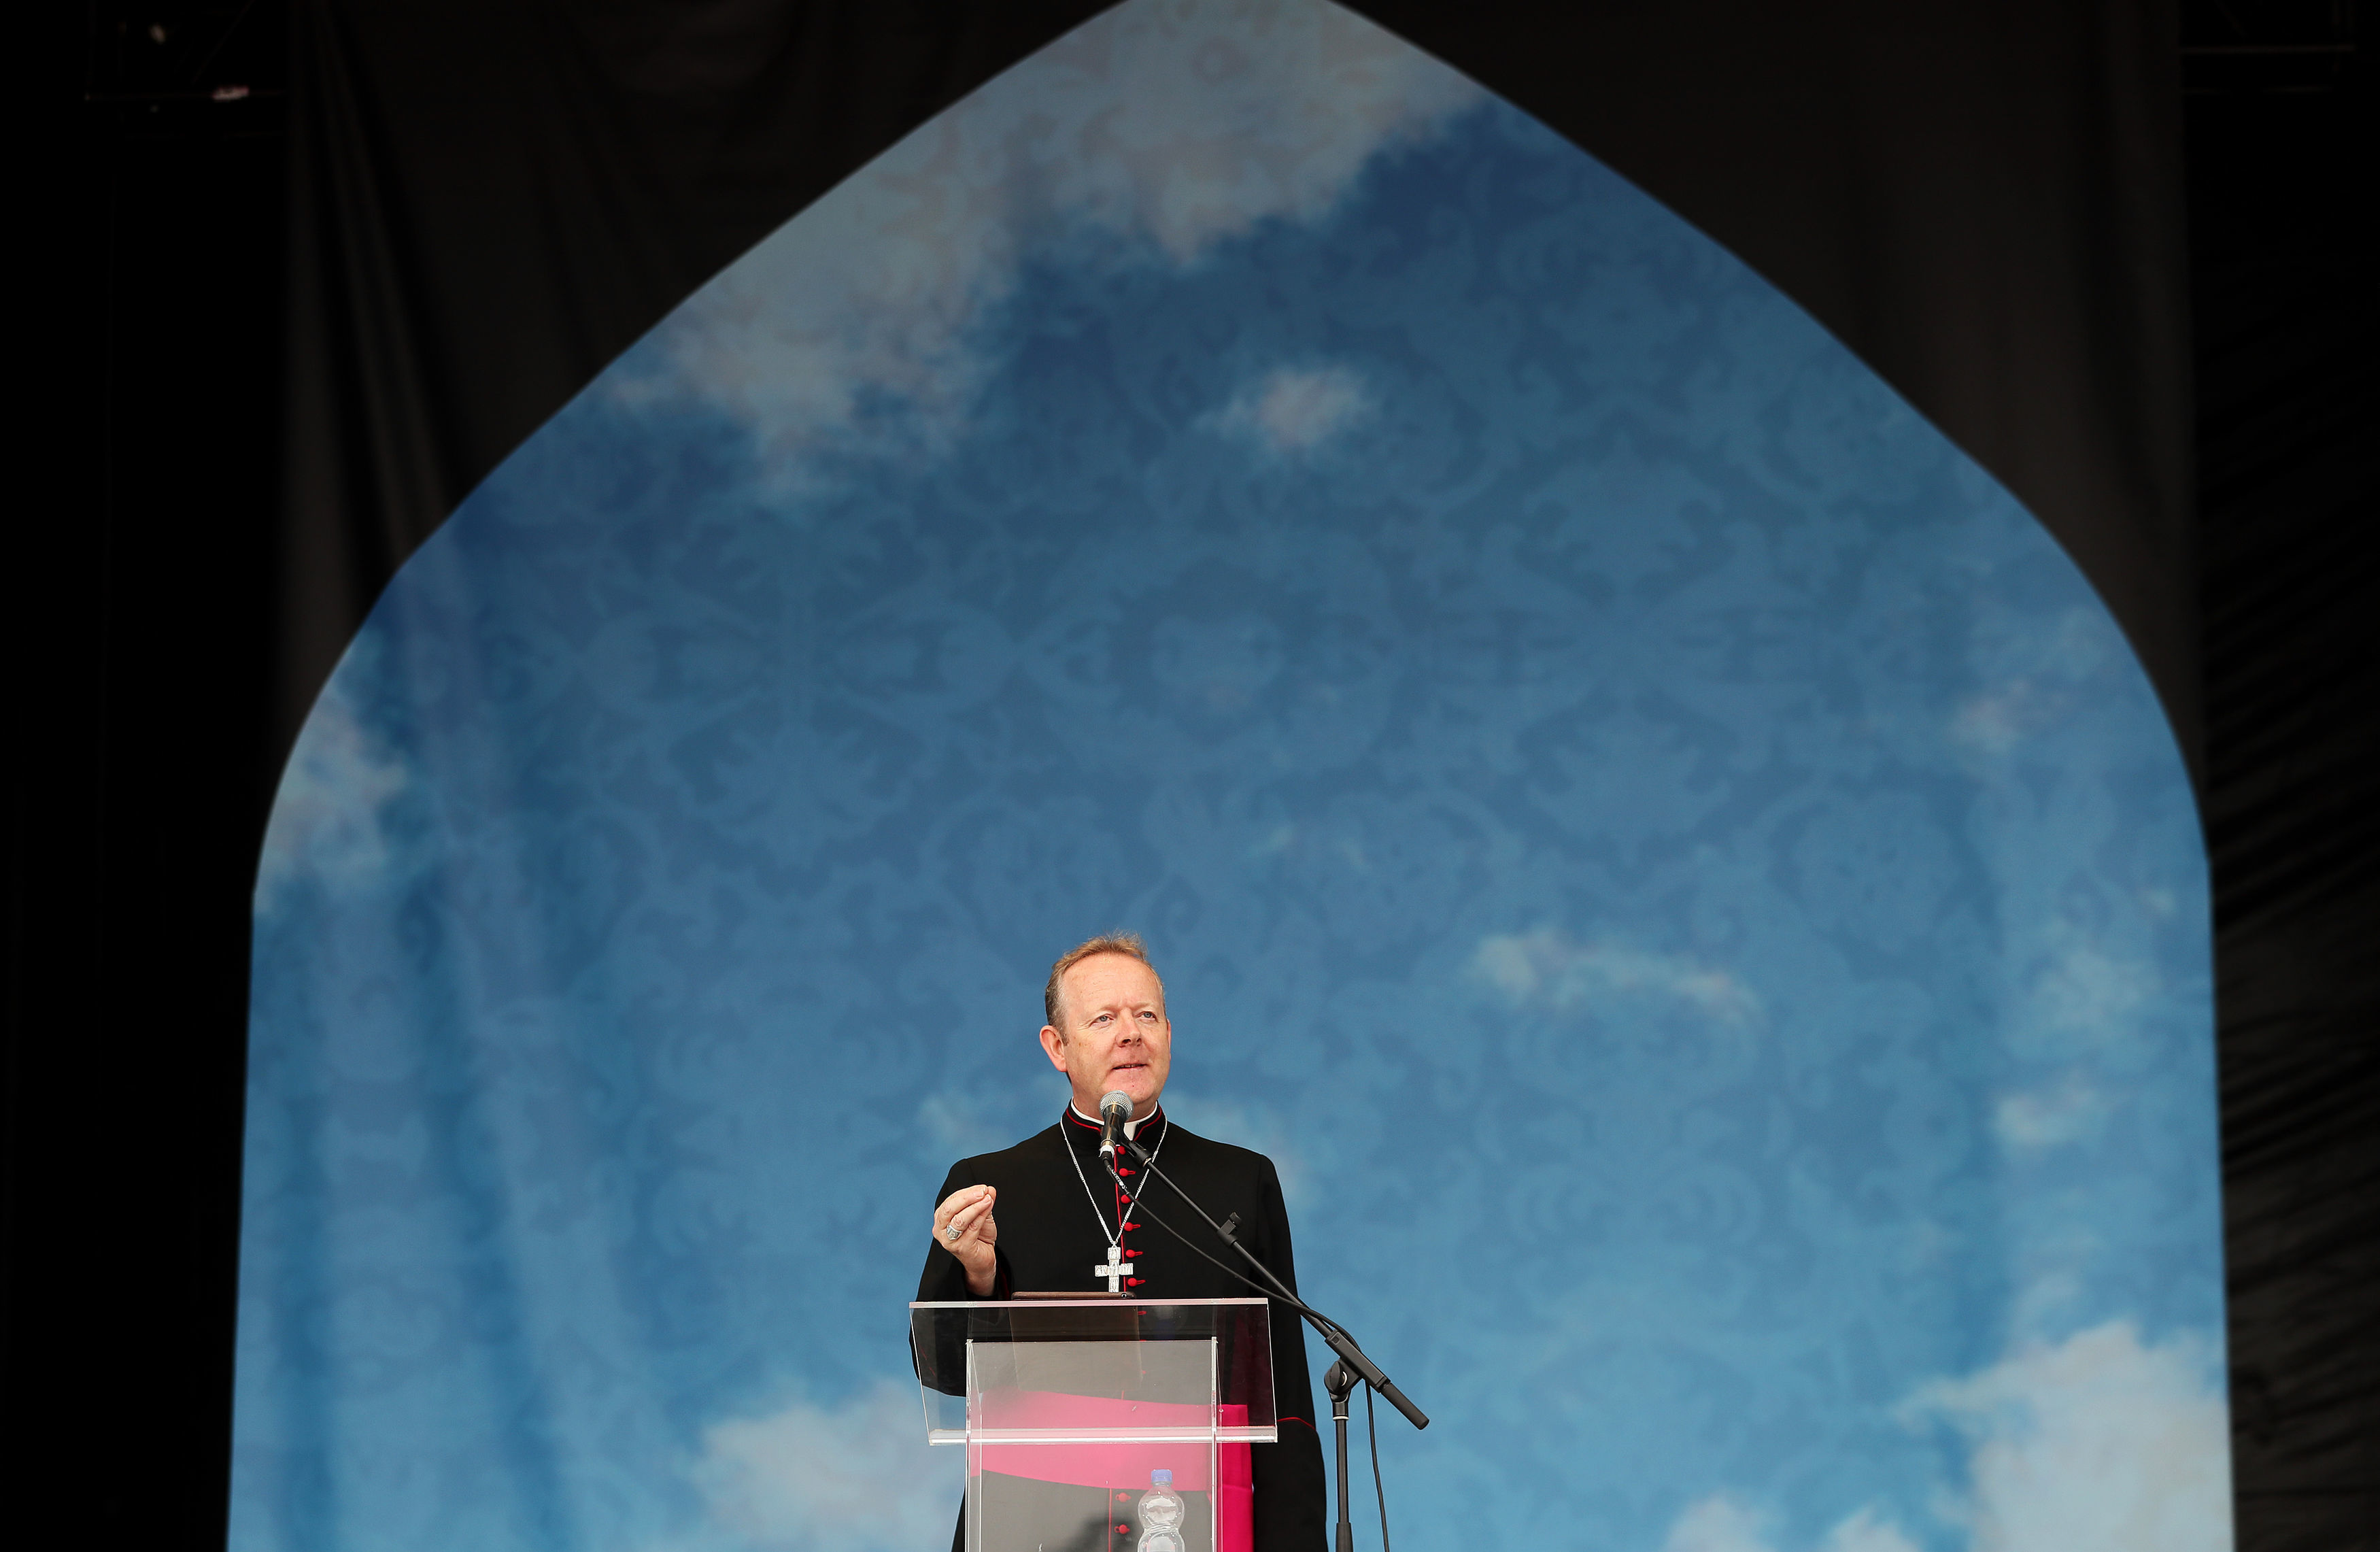 Christians must bring faith to politics, says archbishop